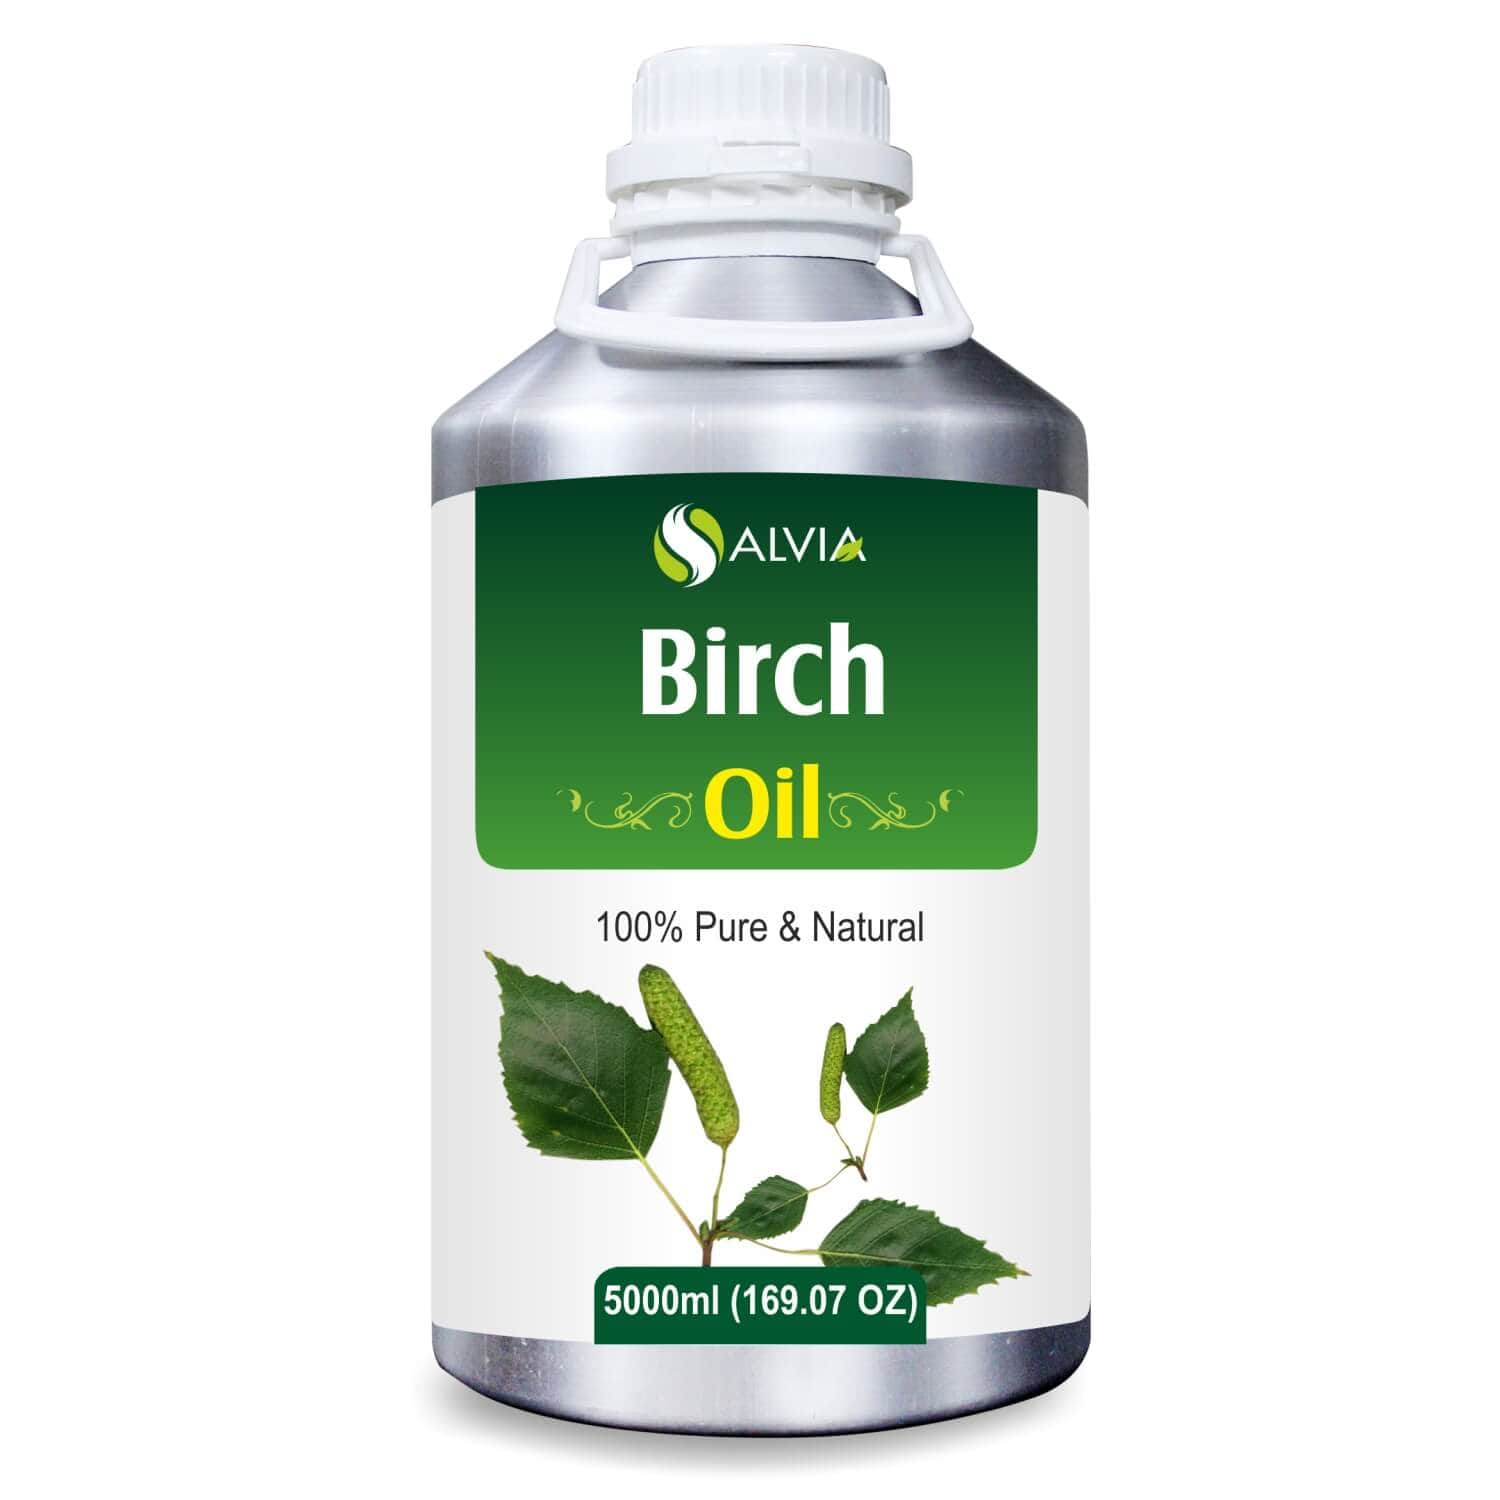 Salvia Natural Essential Oils Birch Oil (Betula Alba) Essential Oil 100% Natural Pure Essential Oil